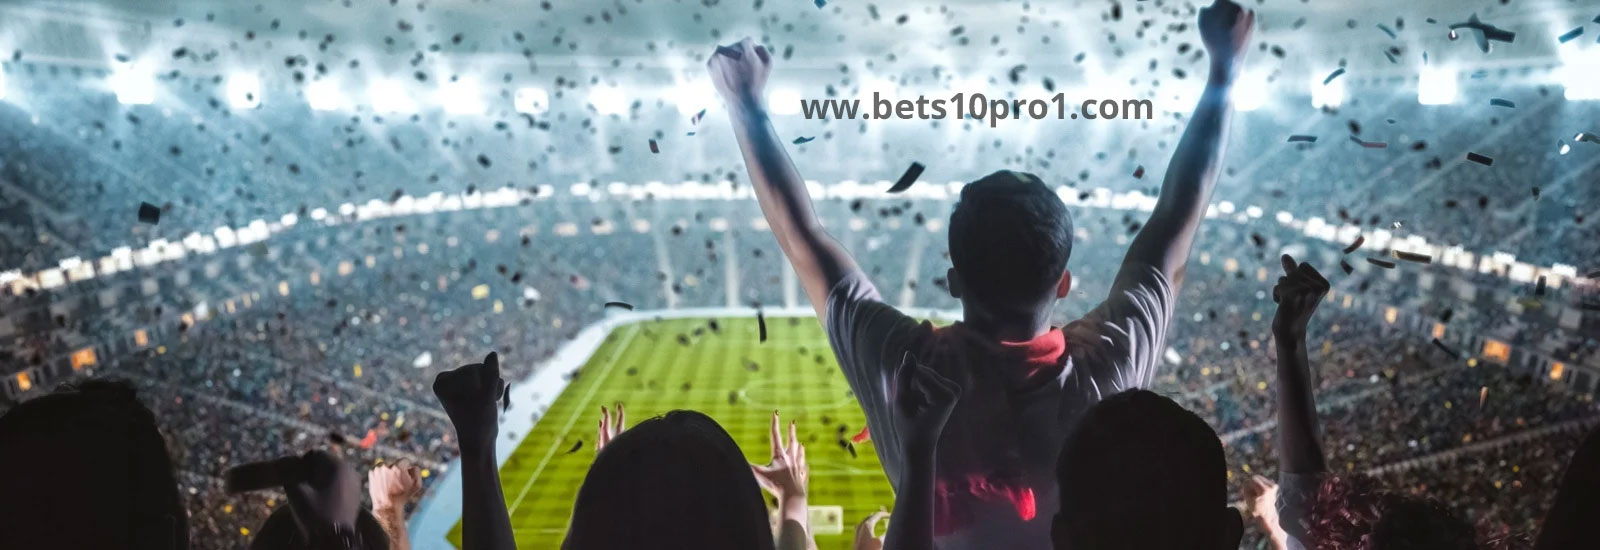 Bets10pro.com Yeni Bets10 Bilgi Adresimiz Bahis